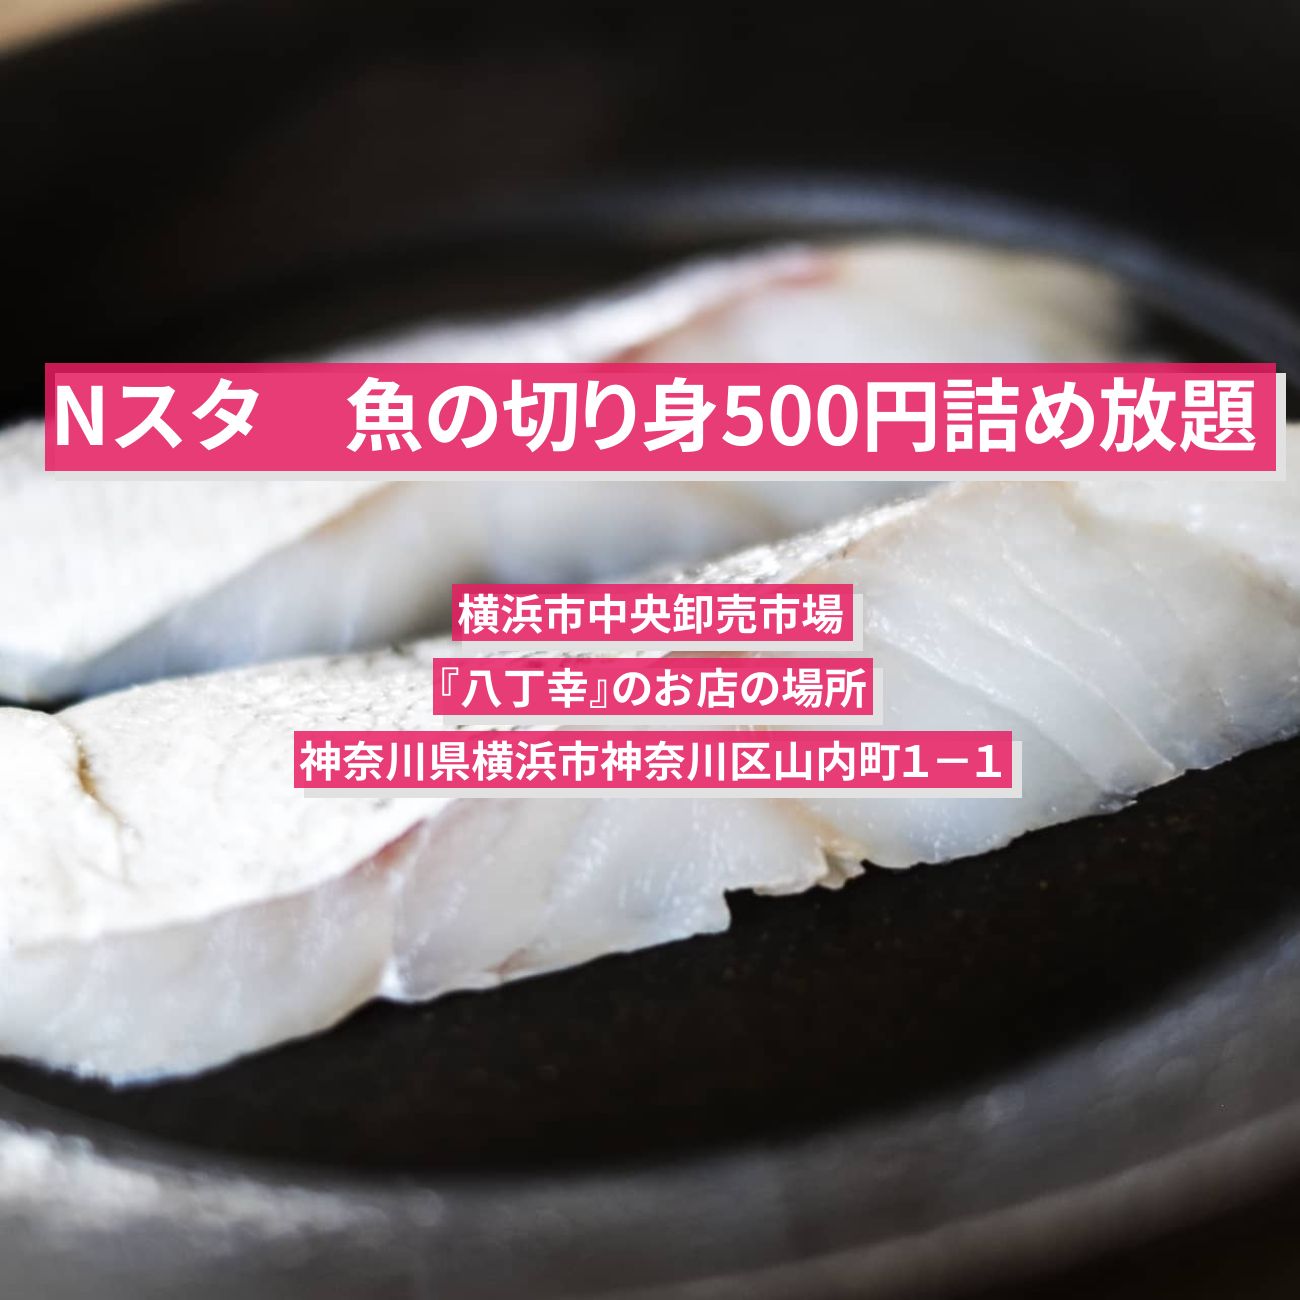 【Nスタ】魚の切り身500円詰め放題『八丁幸』横浜市中央卸売市場のお店の場所